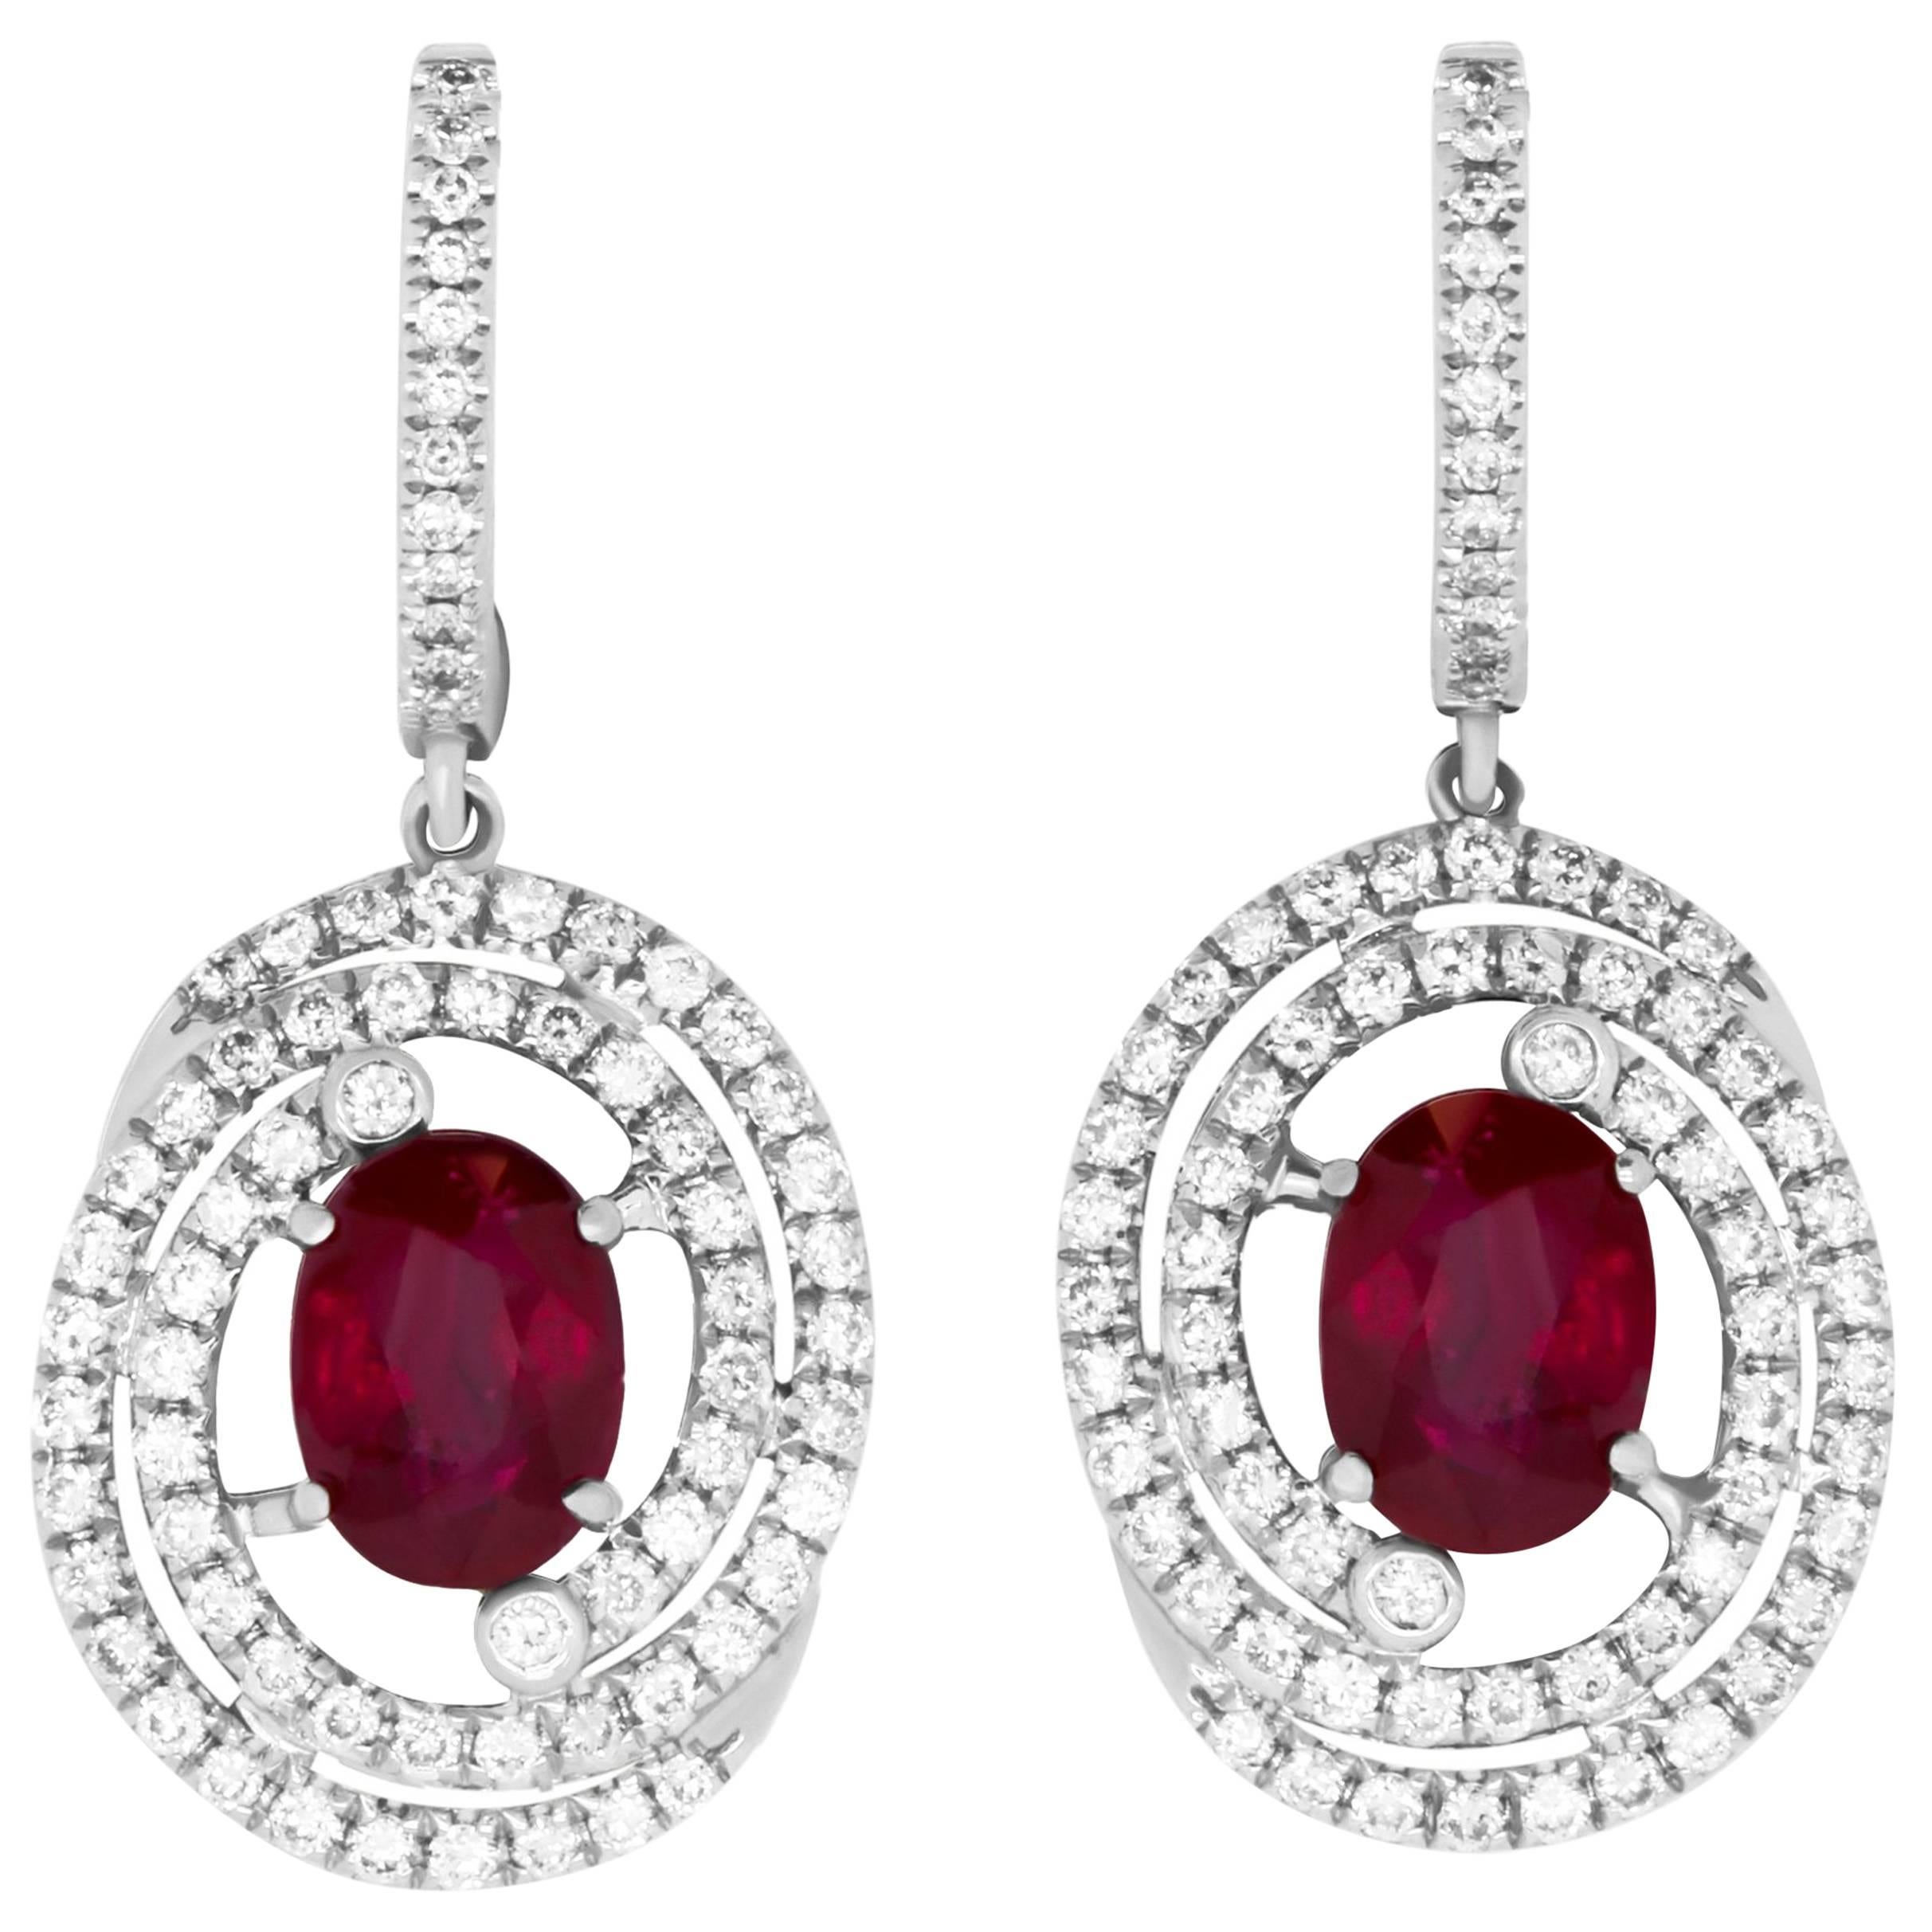 2.45 Carat Oval Ruby and .75 Carat Diamond Earrings